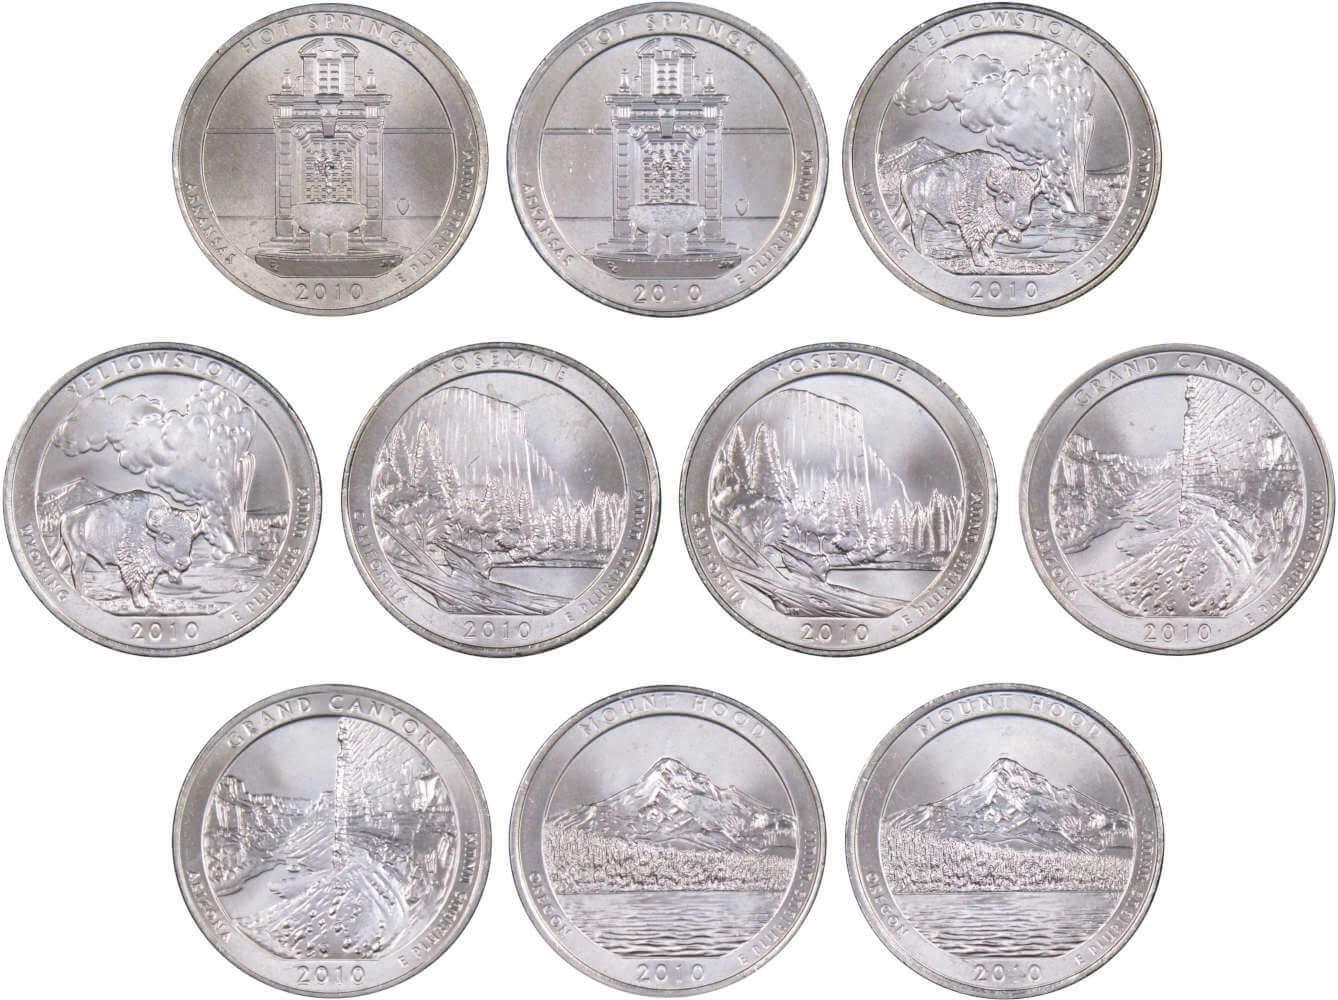 2010 P&D National Park Quarter 10 Coin Set Uncirculated Mint State 25c